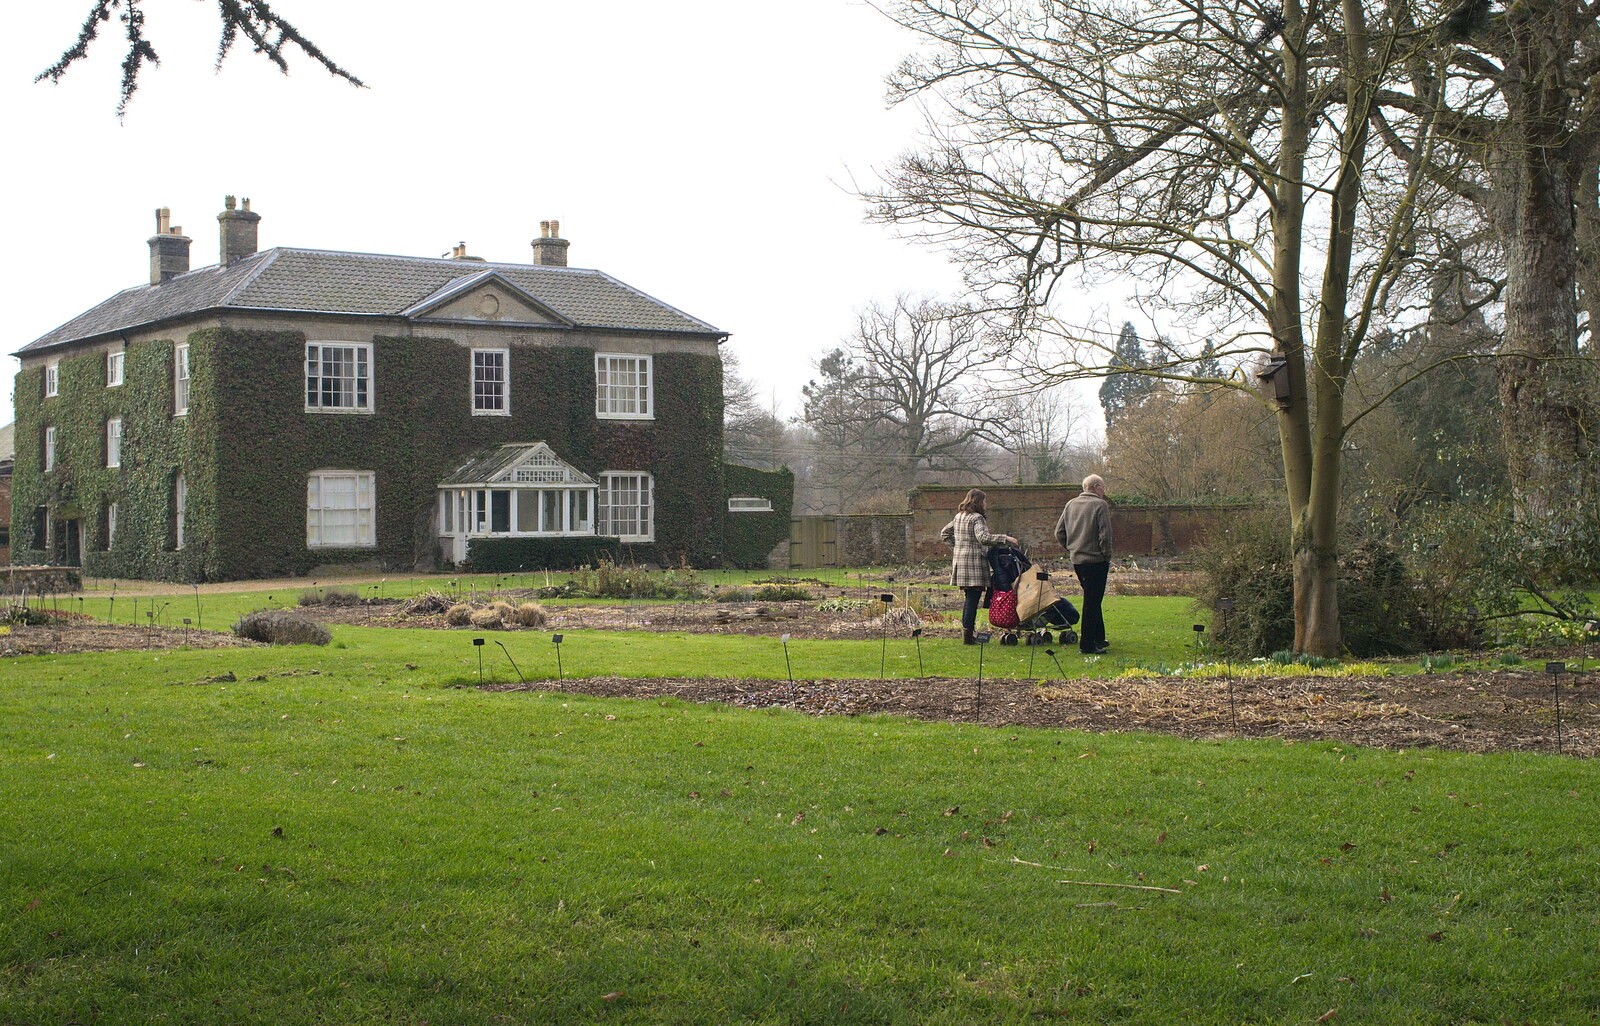 The house in the gardens from A Walk around Bressingham Winter Garden, Bressingham, Norfolk - 3rd March 2013